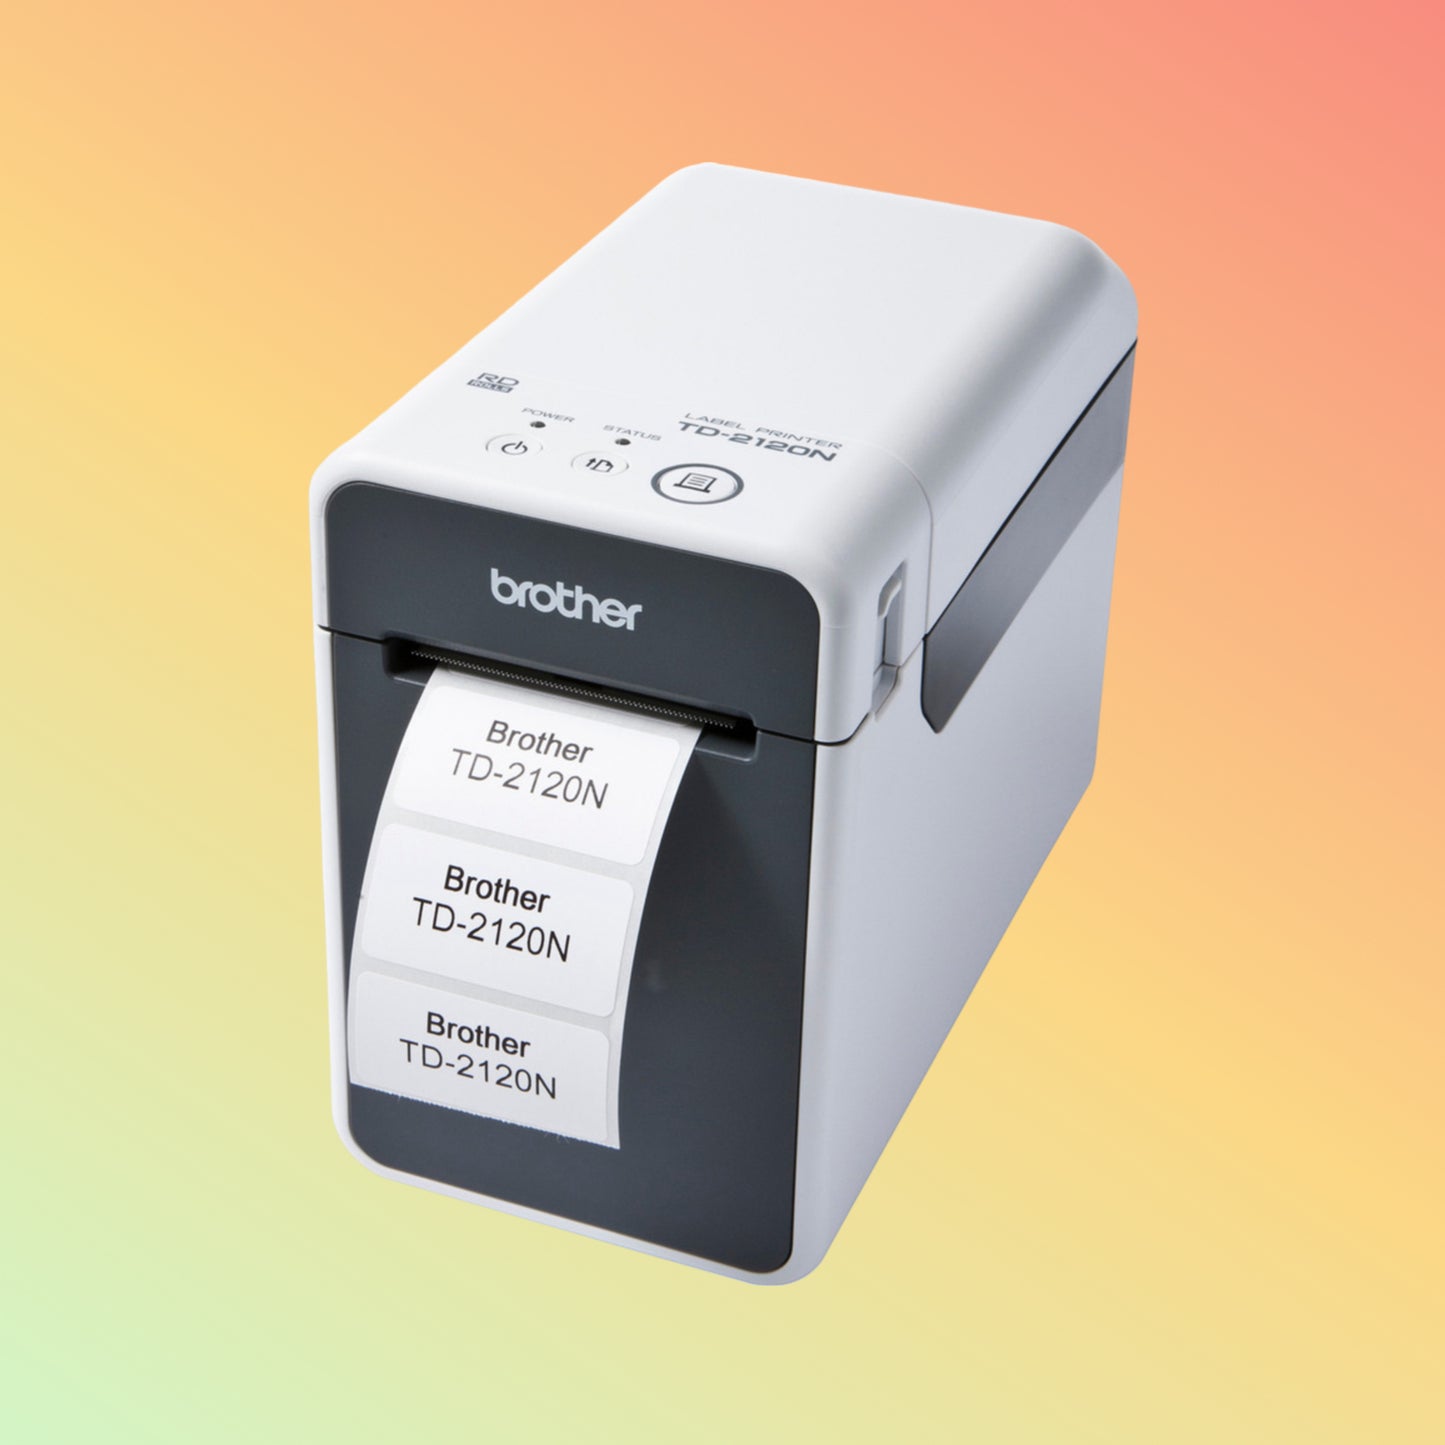 Brother TD-2000 Label Printer